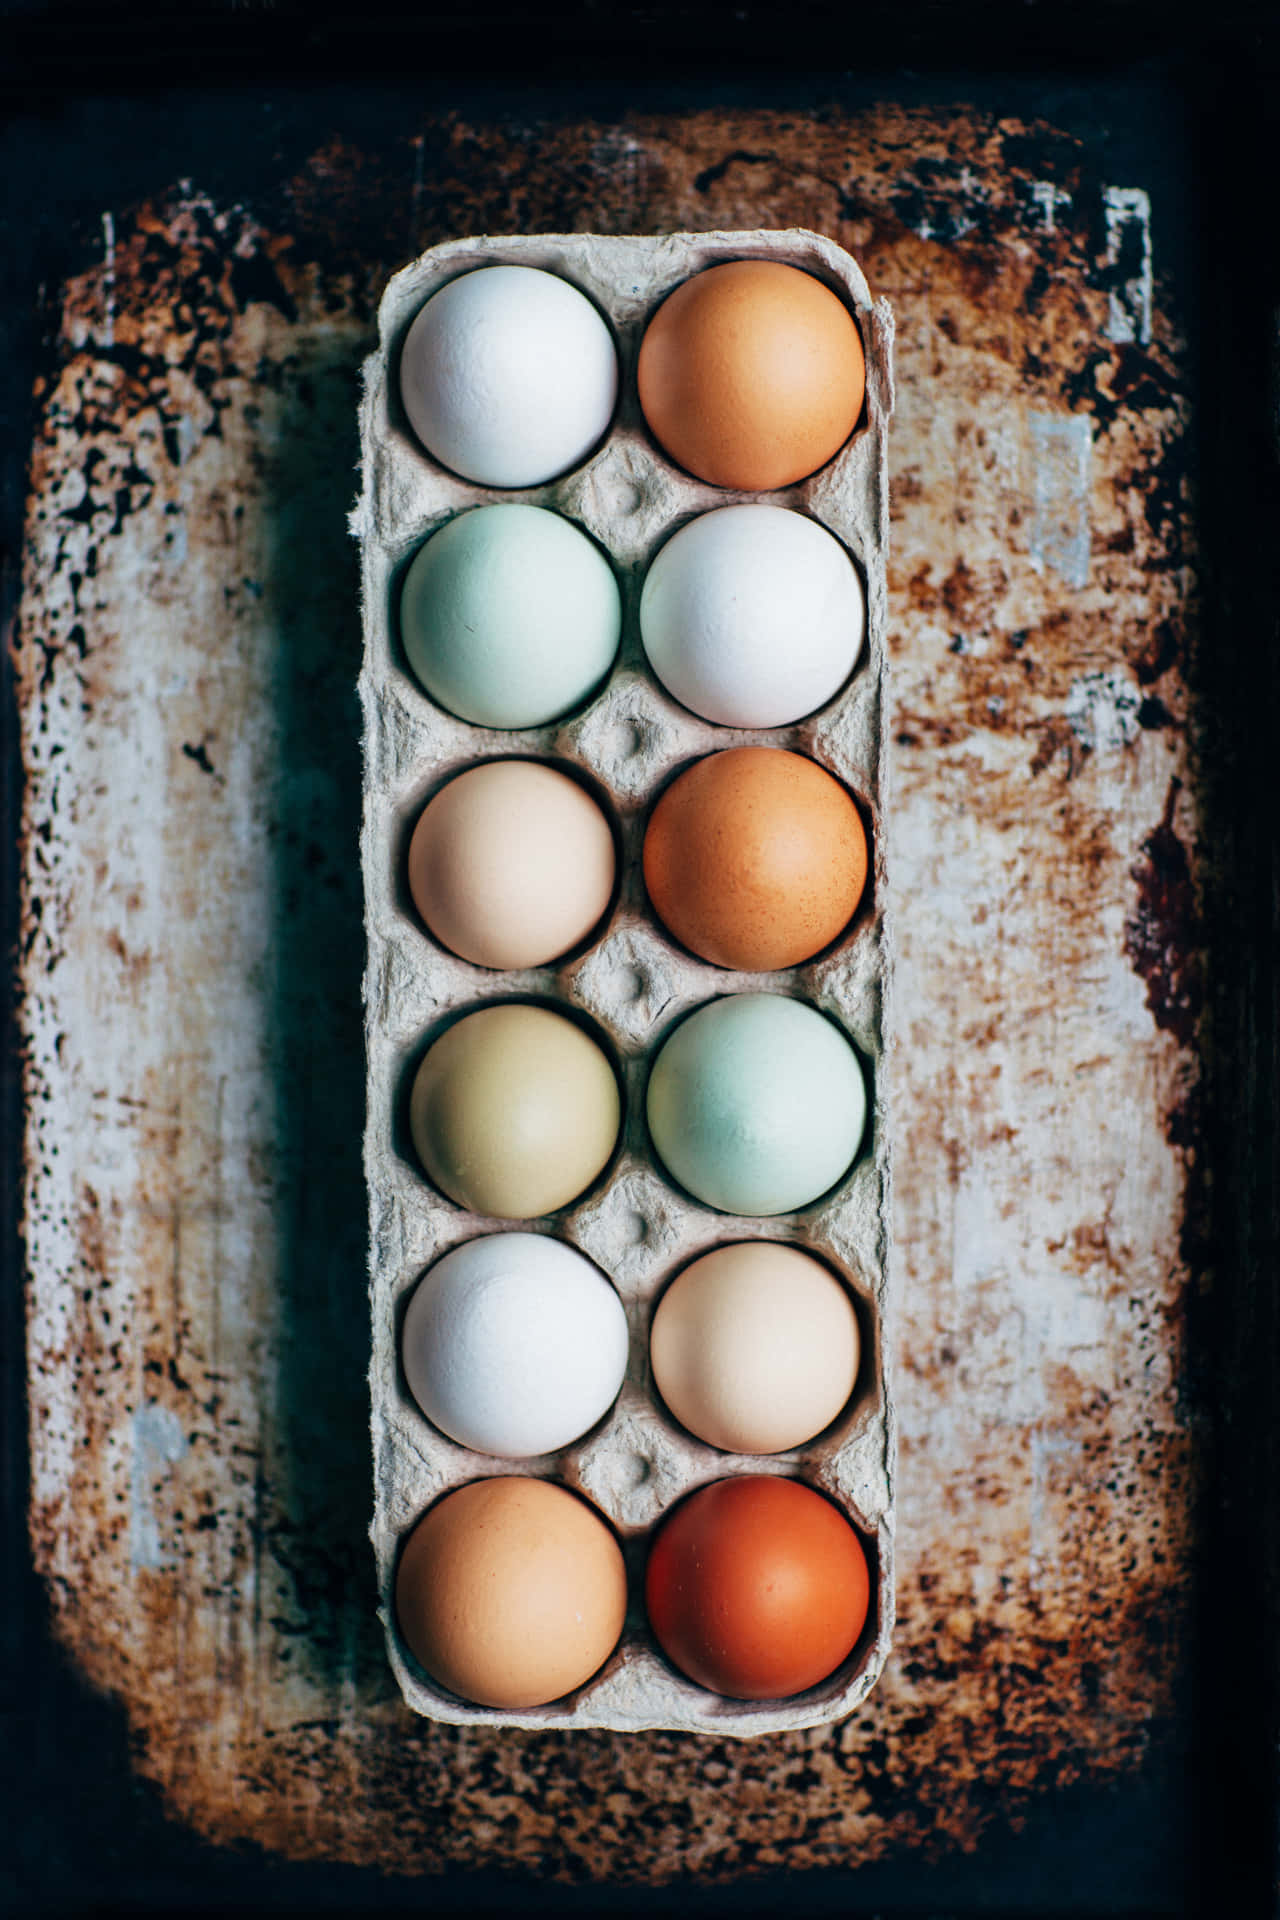 Enjoy a Healthy And Nutritious Breakfast With Farm-Fresh Eggs